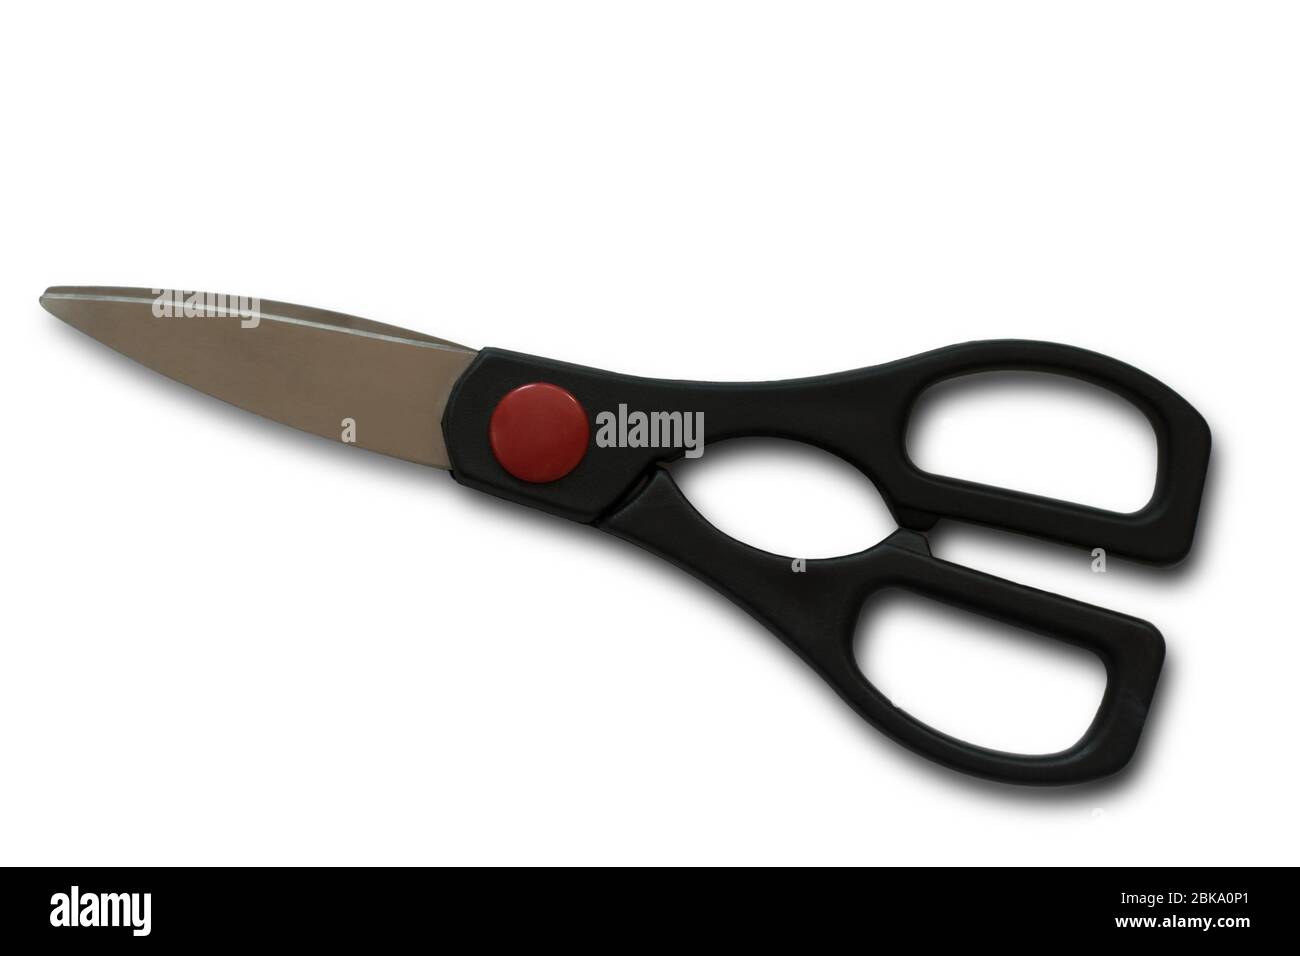 metal scissors on isolated background Stock Photo